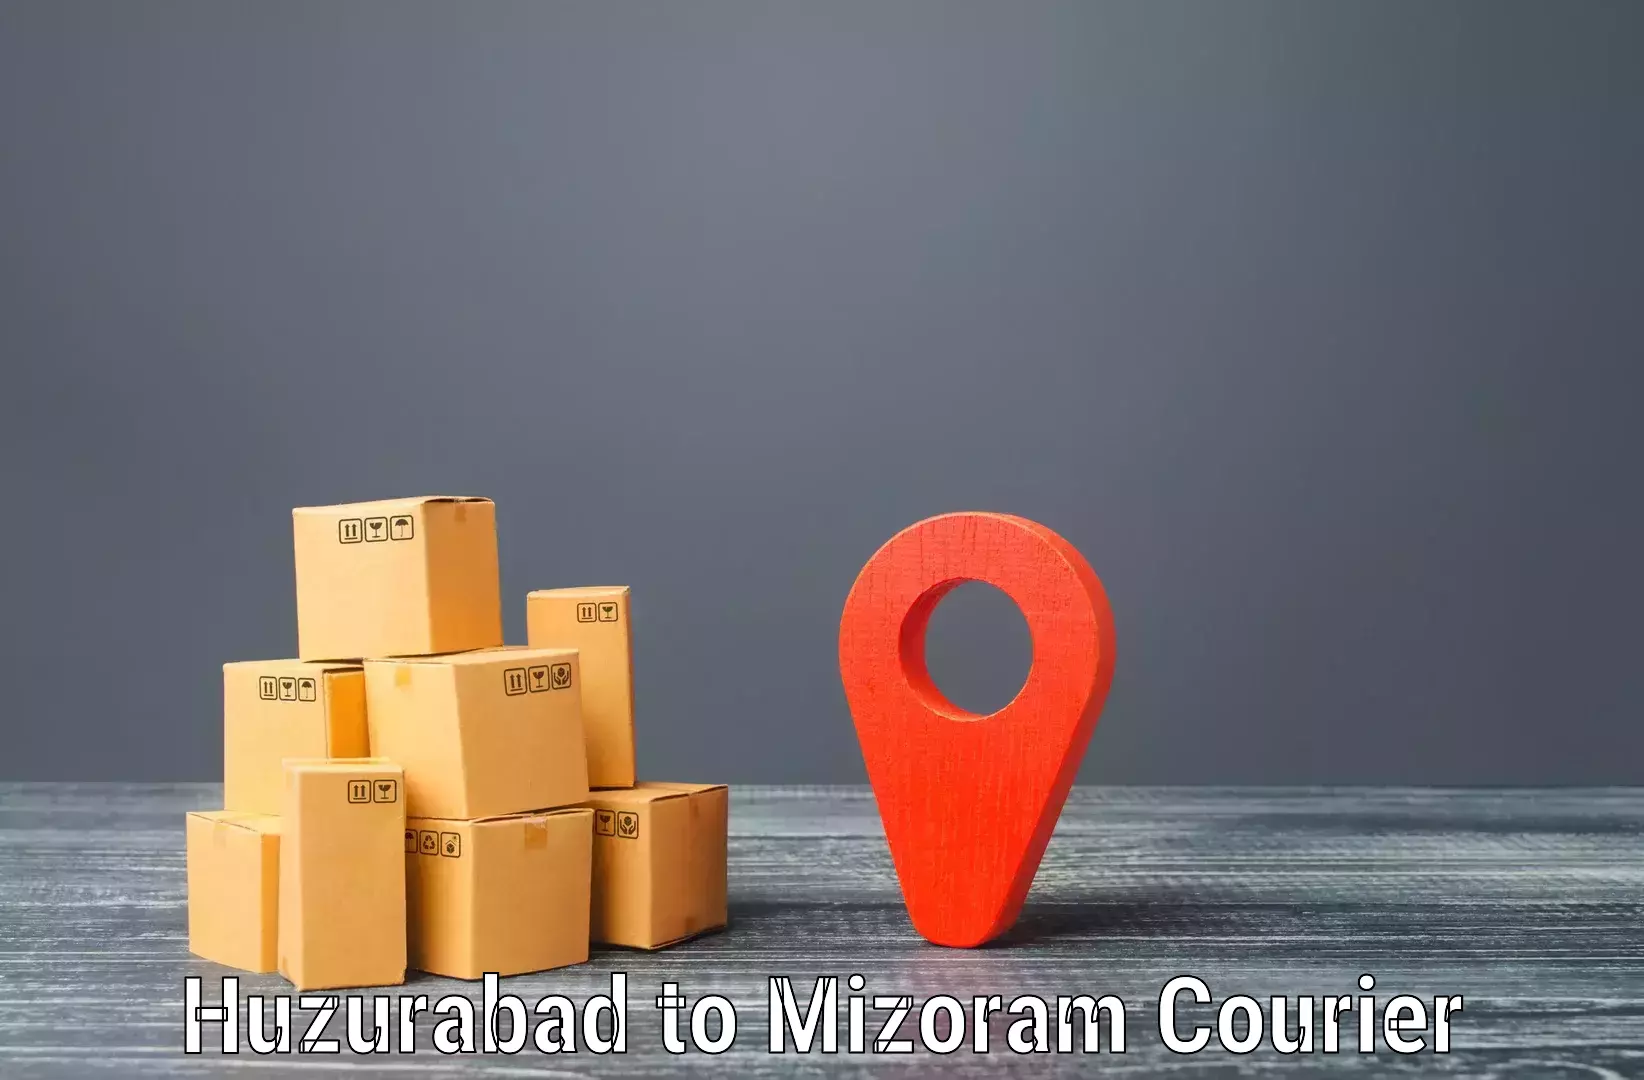 Logistics efficiency Huzurabad to Mizoram